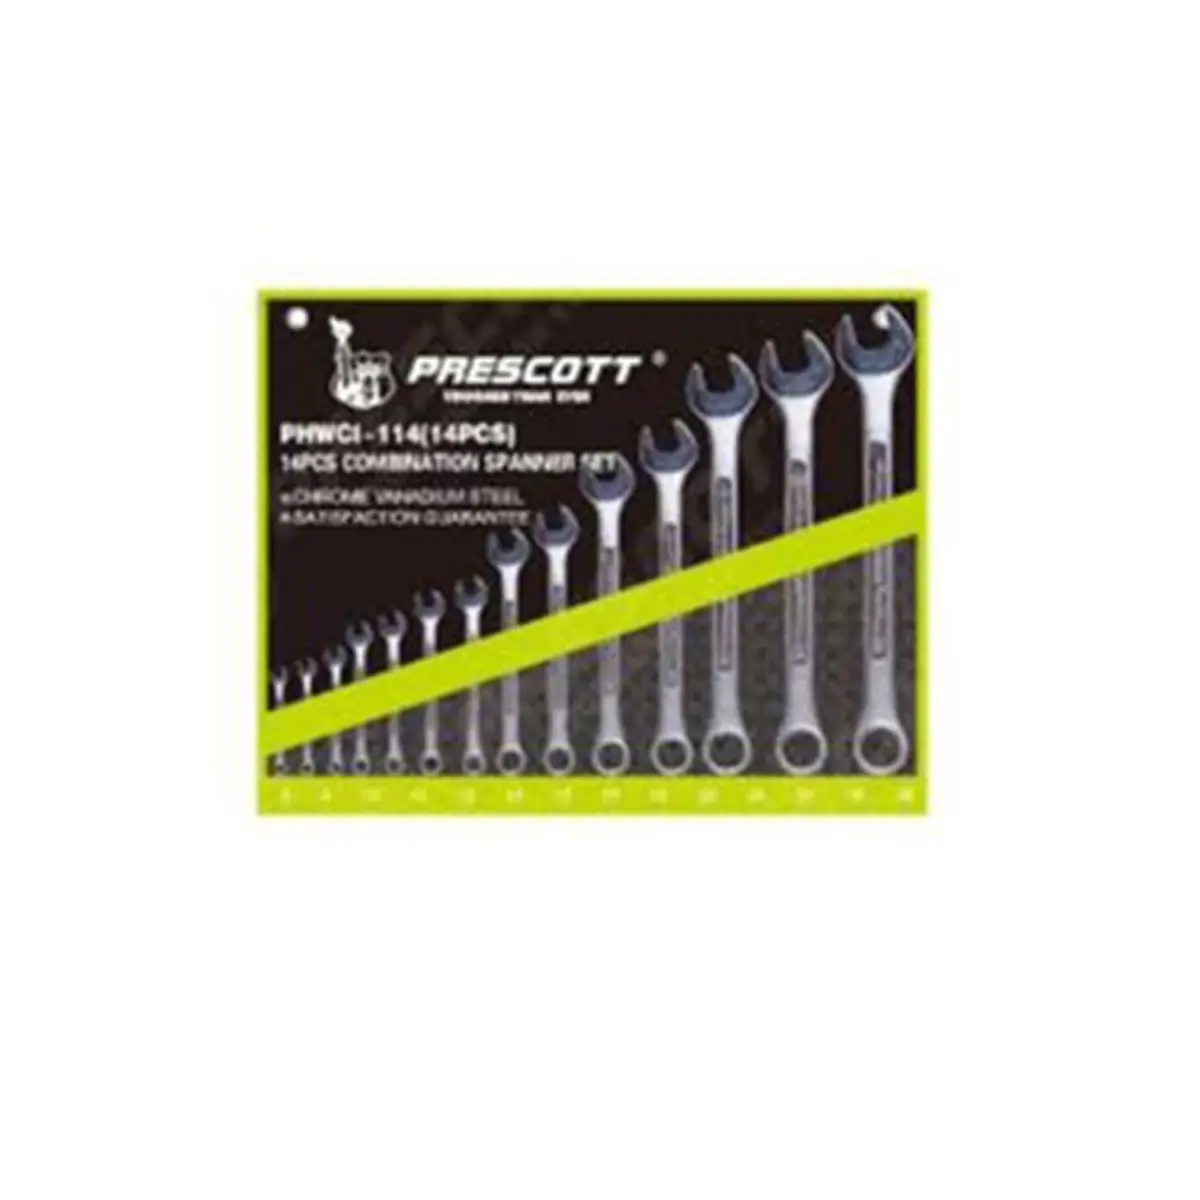 Prescott 14pc Combination Spanner Set PHWC014